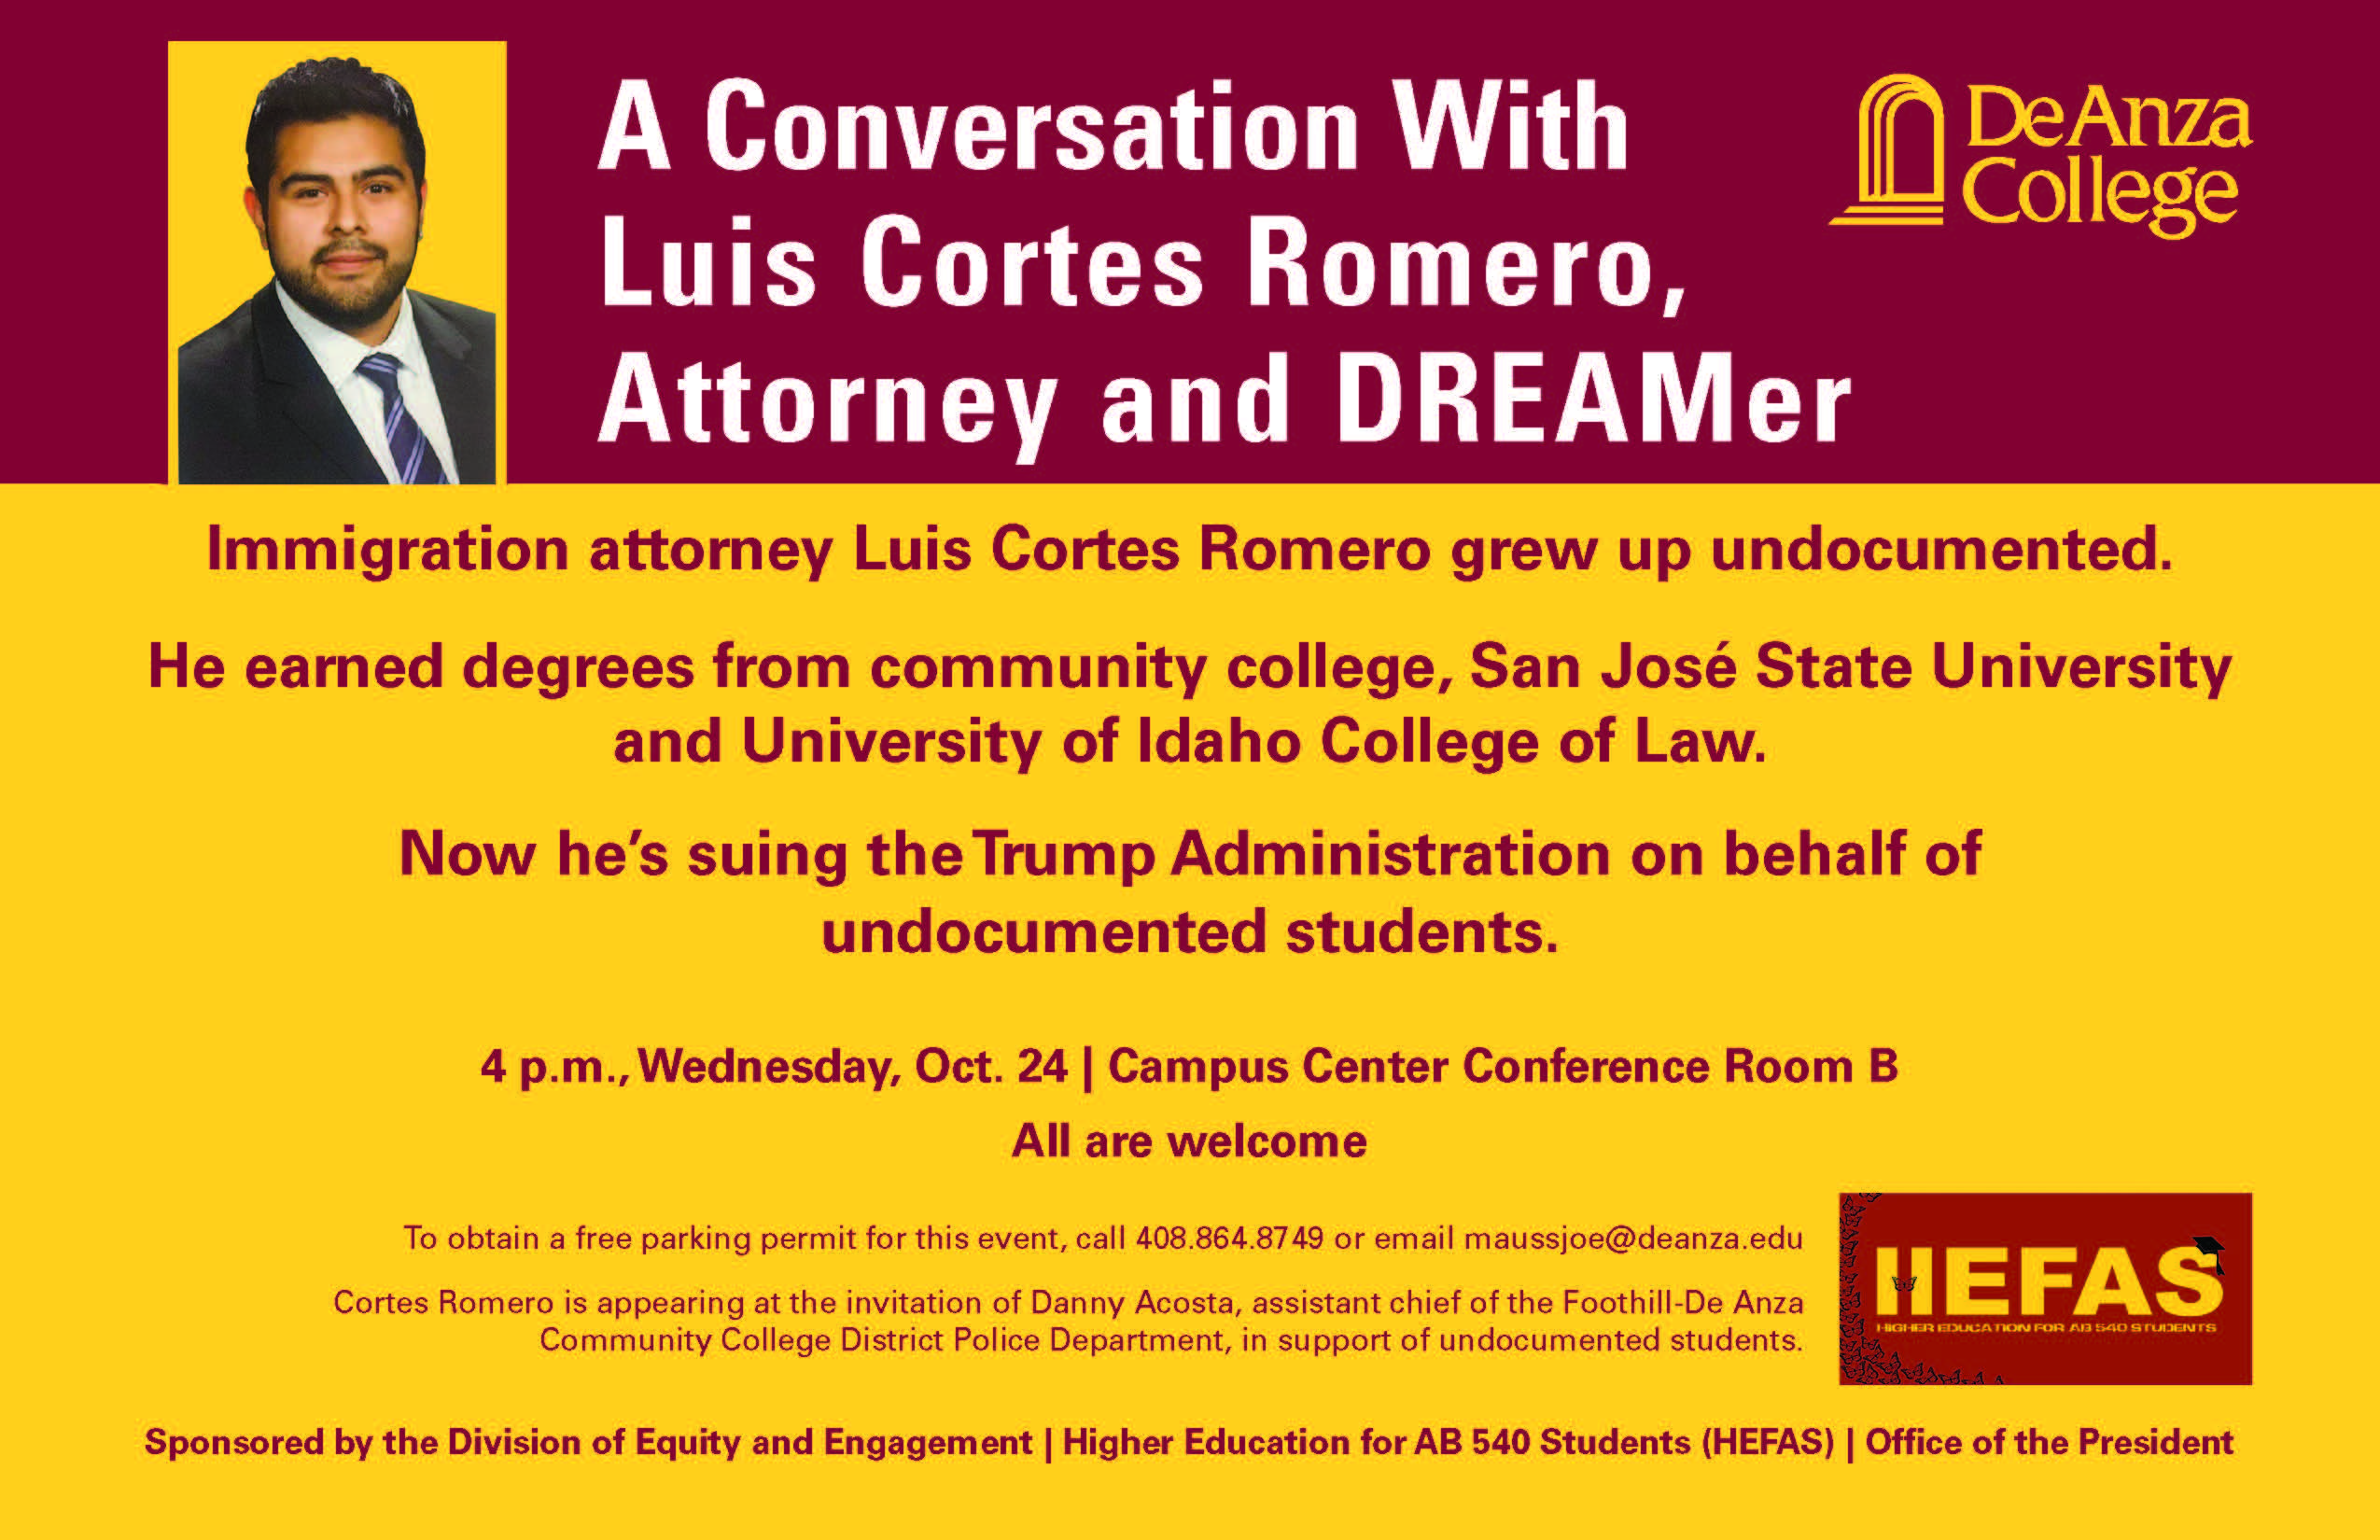 A Conversation with Luis Cortes Romero Flyer